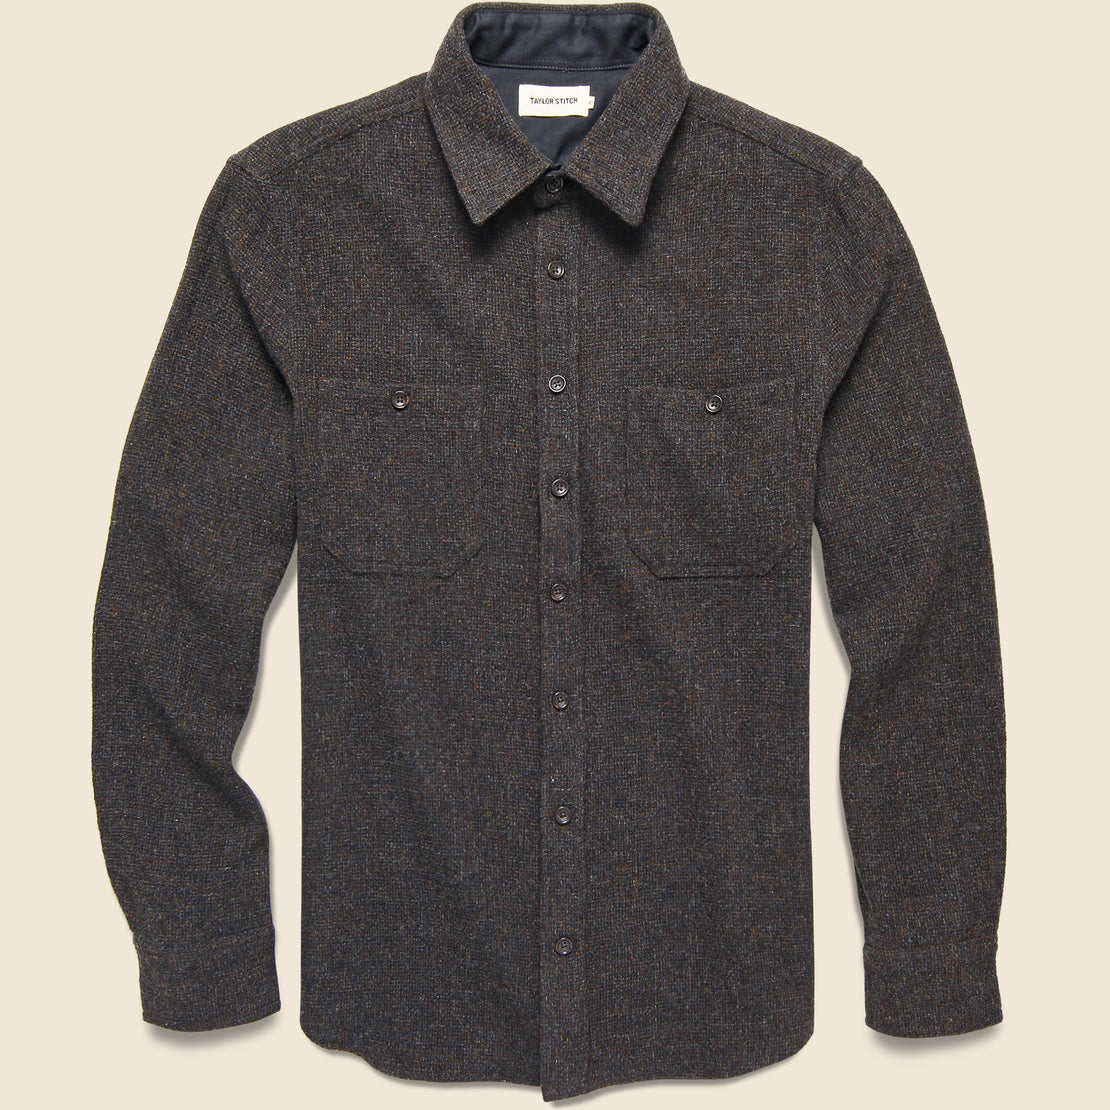 Taylor Stitch Service Shirt - Moss Melange Wool